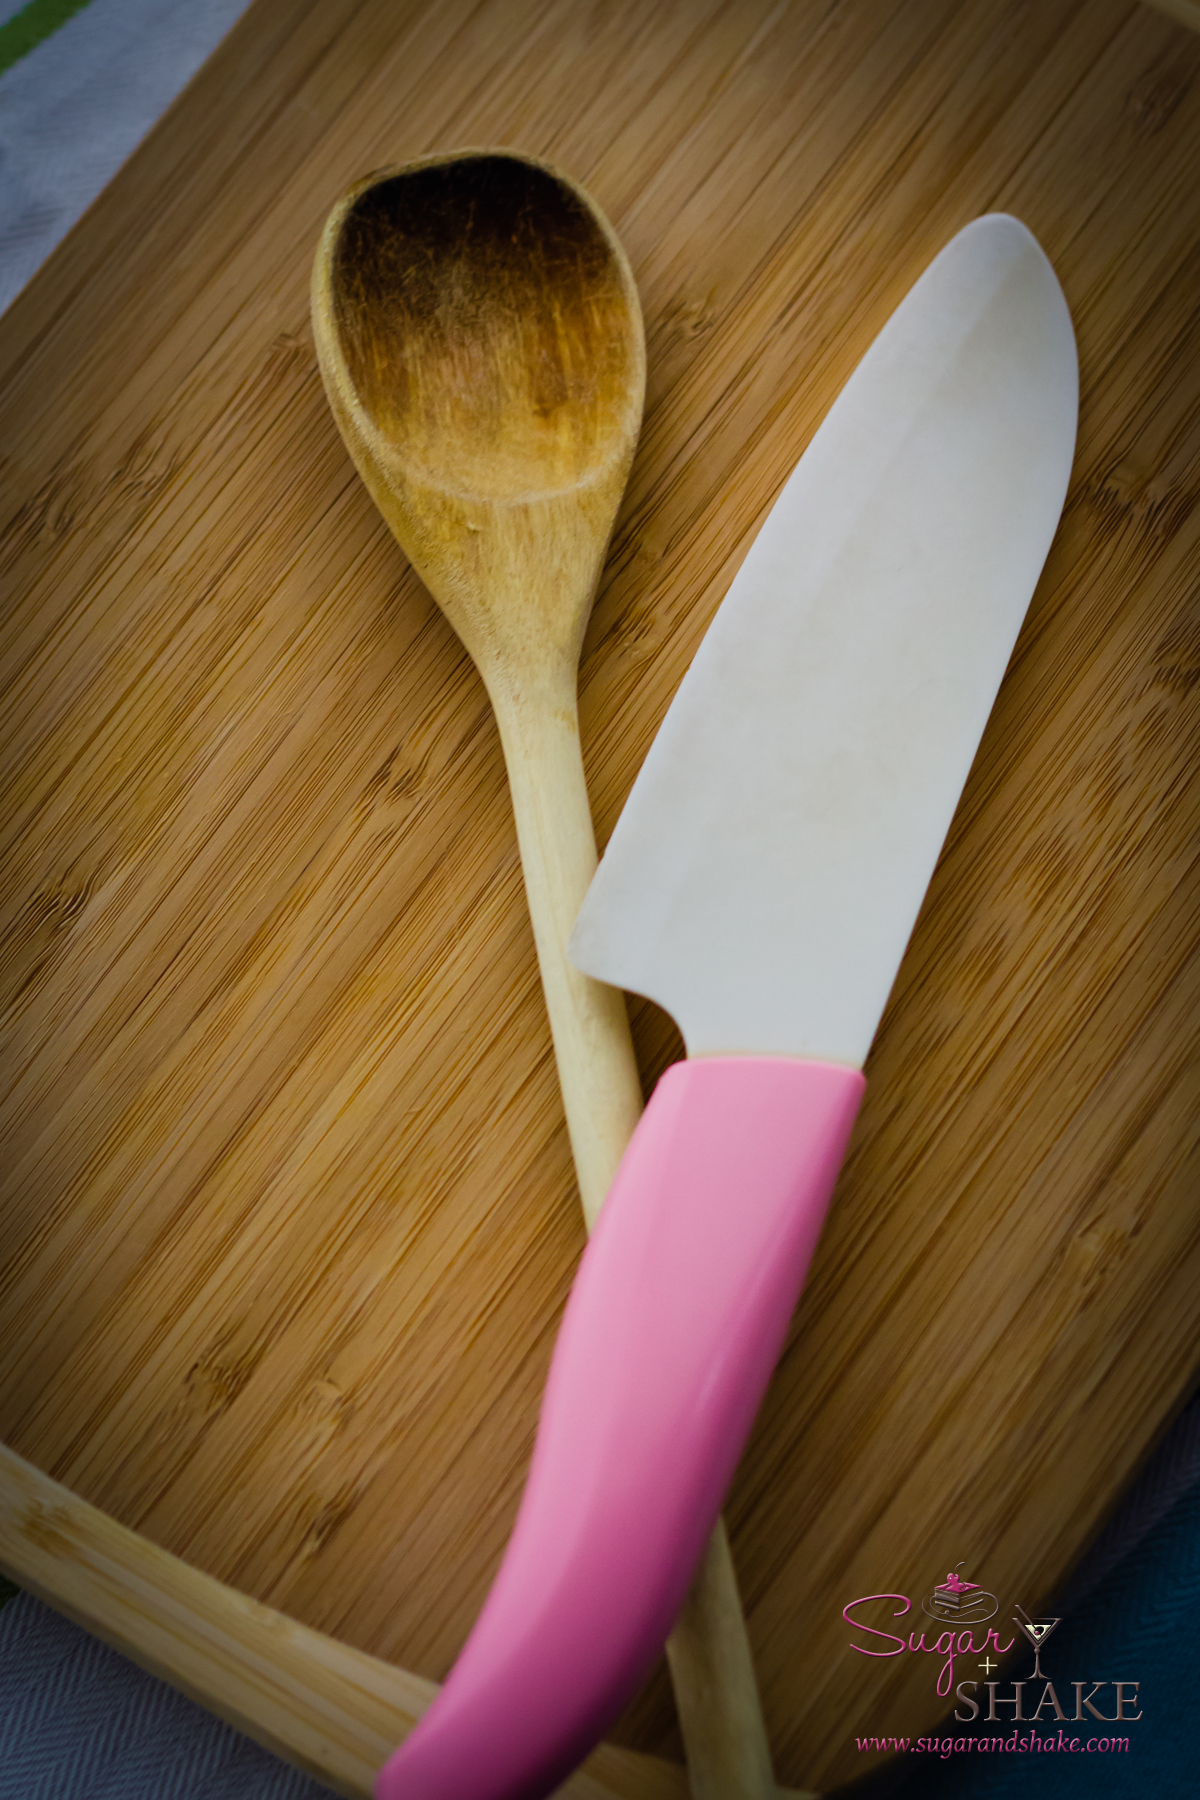 Favorite tools. Sugar loves this wooden spoon and ceramic knife. © 2013 Sugar + Shake